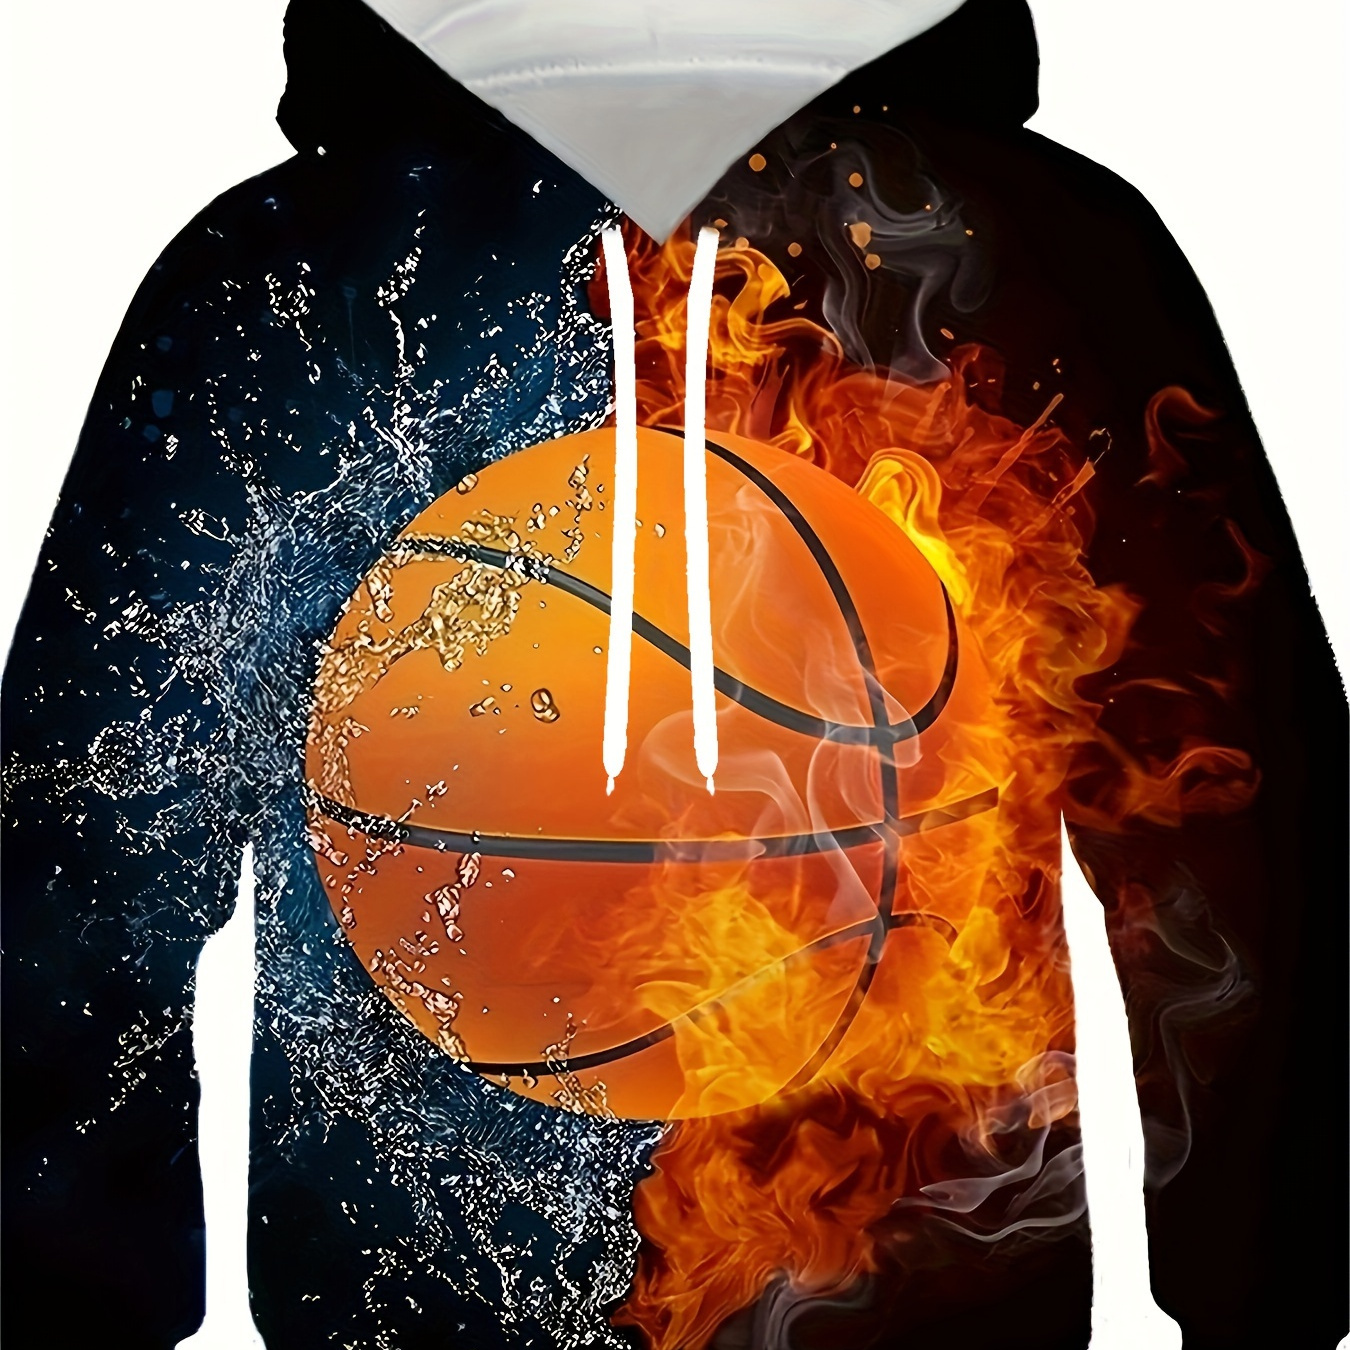 

Fire Basketball 3d Print Men's Chic Long Sleeve Hooded Sweatshirt, Men's Sports Hoodie, Spring Fall Outdoor